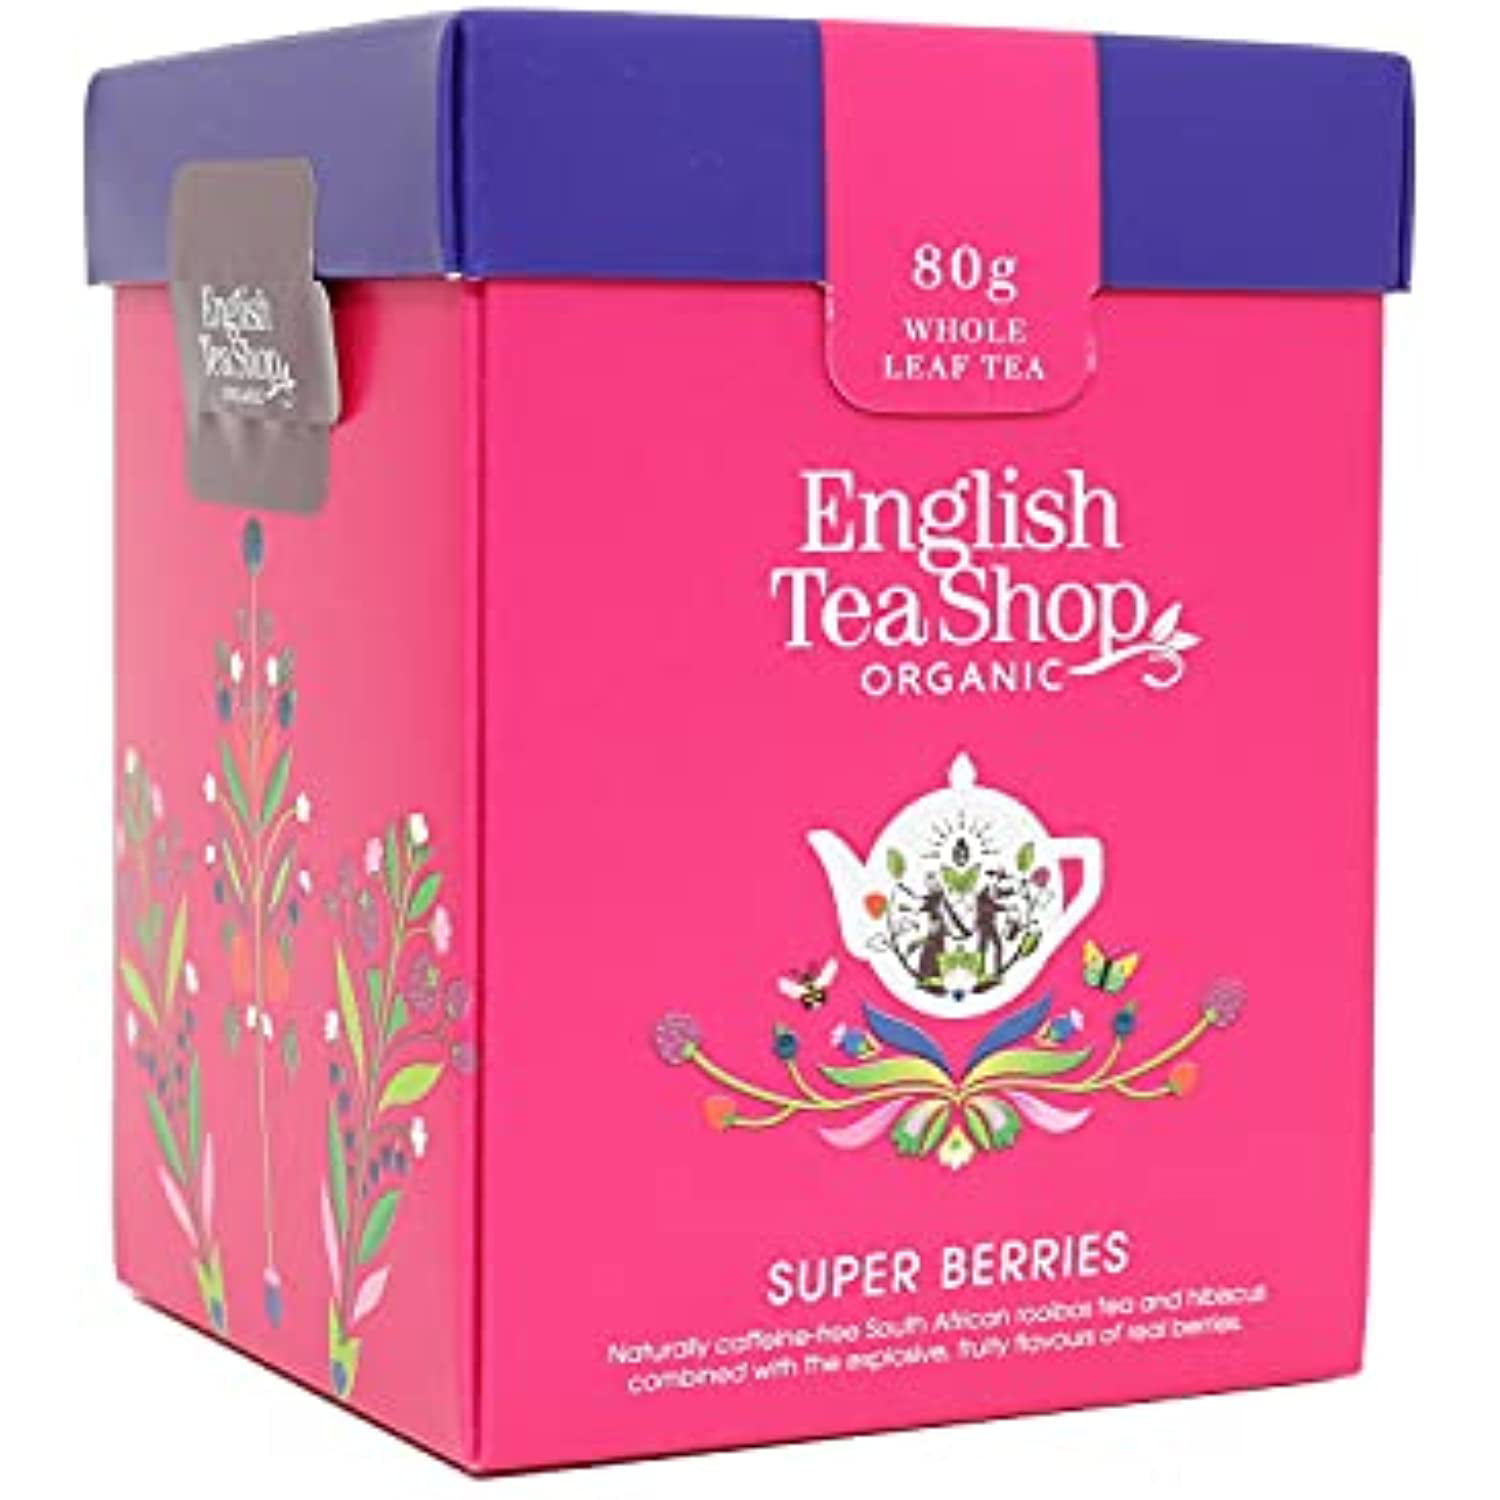 English Tea Shop Organic Super Berries - 80G Whole Leaf Tea Pack, 80G